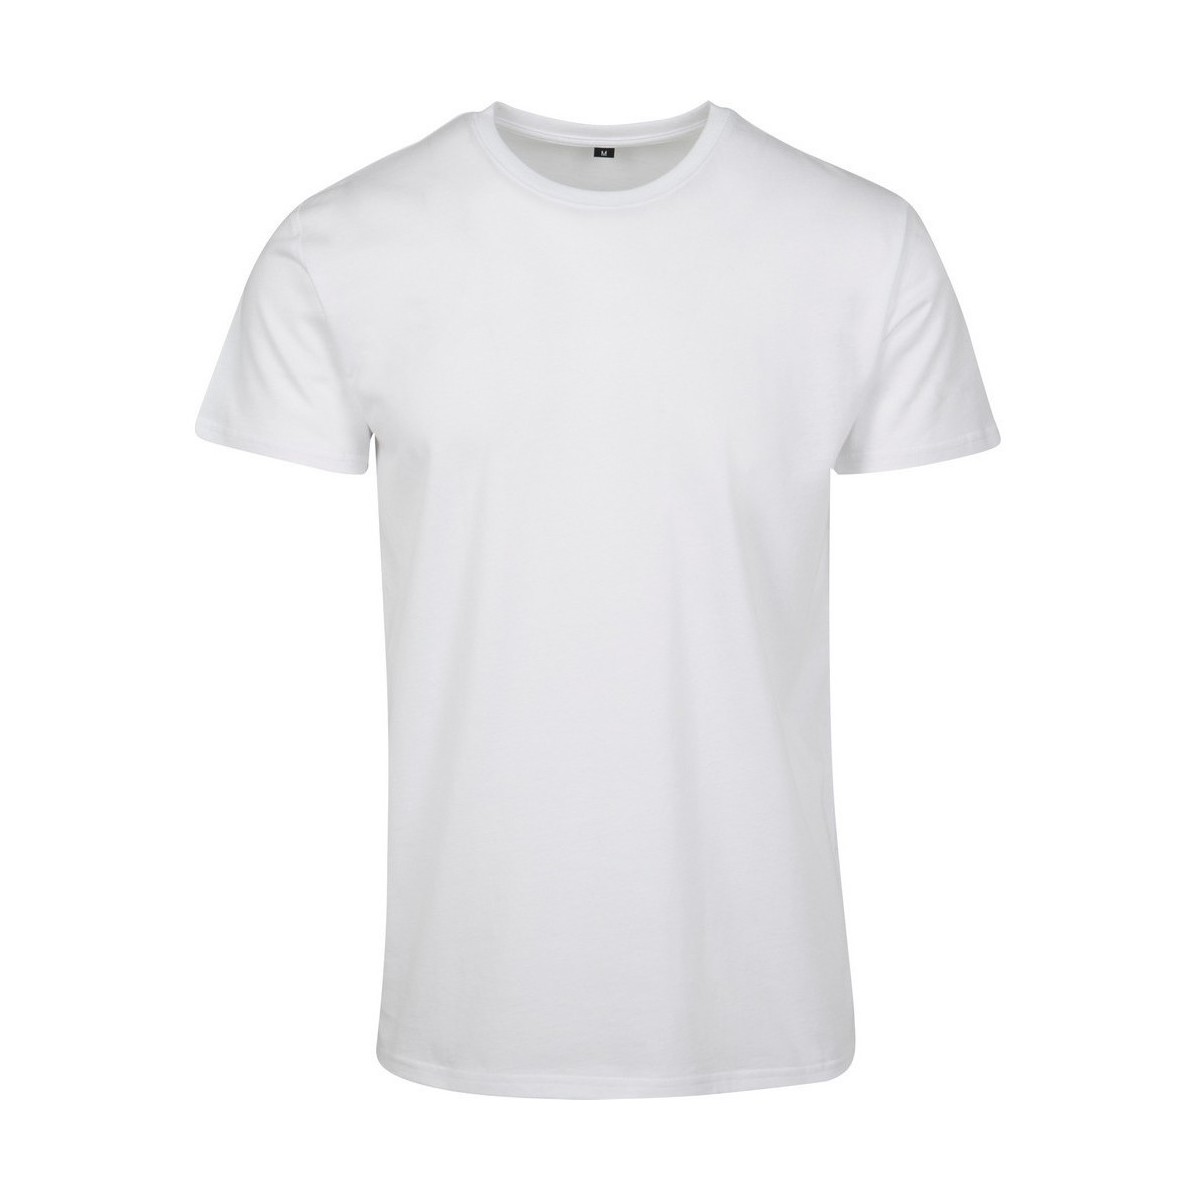 textil Hombre Camisetas manga larga Build Your Brand Basic Blanco